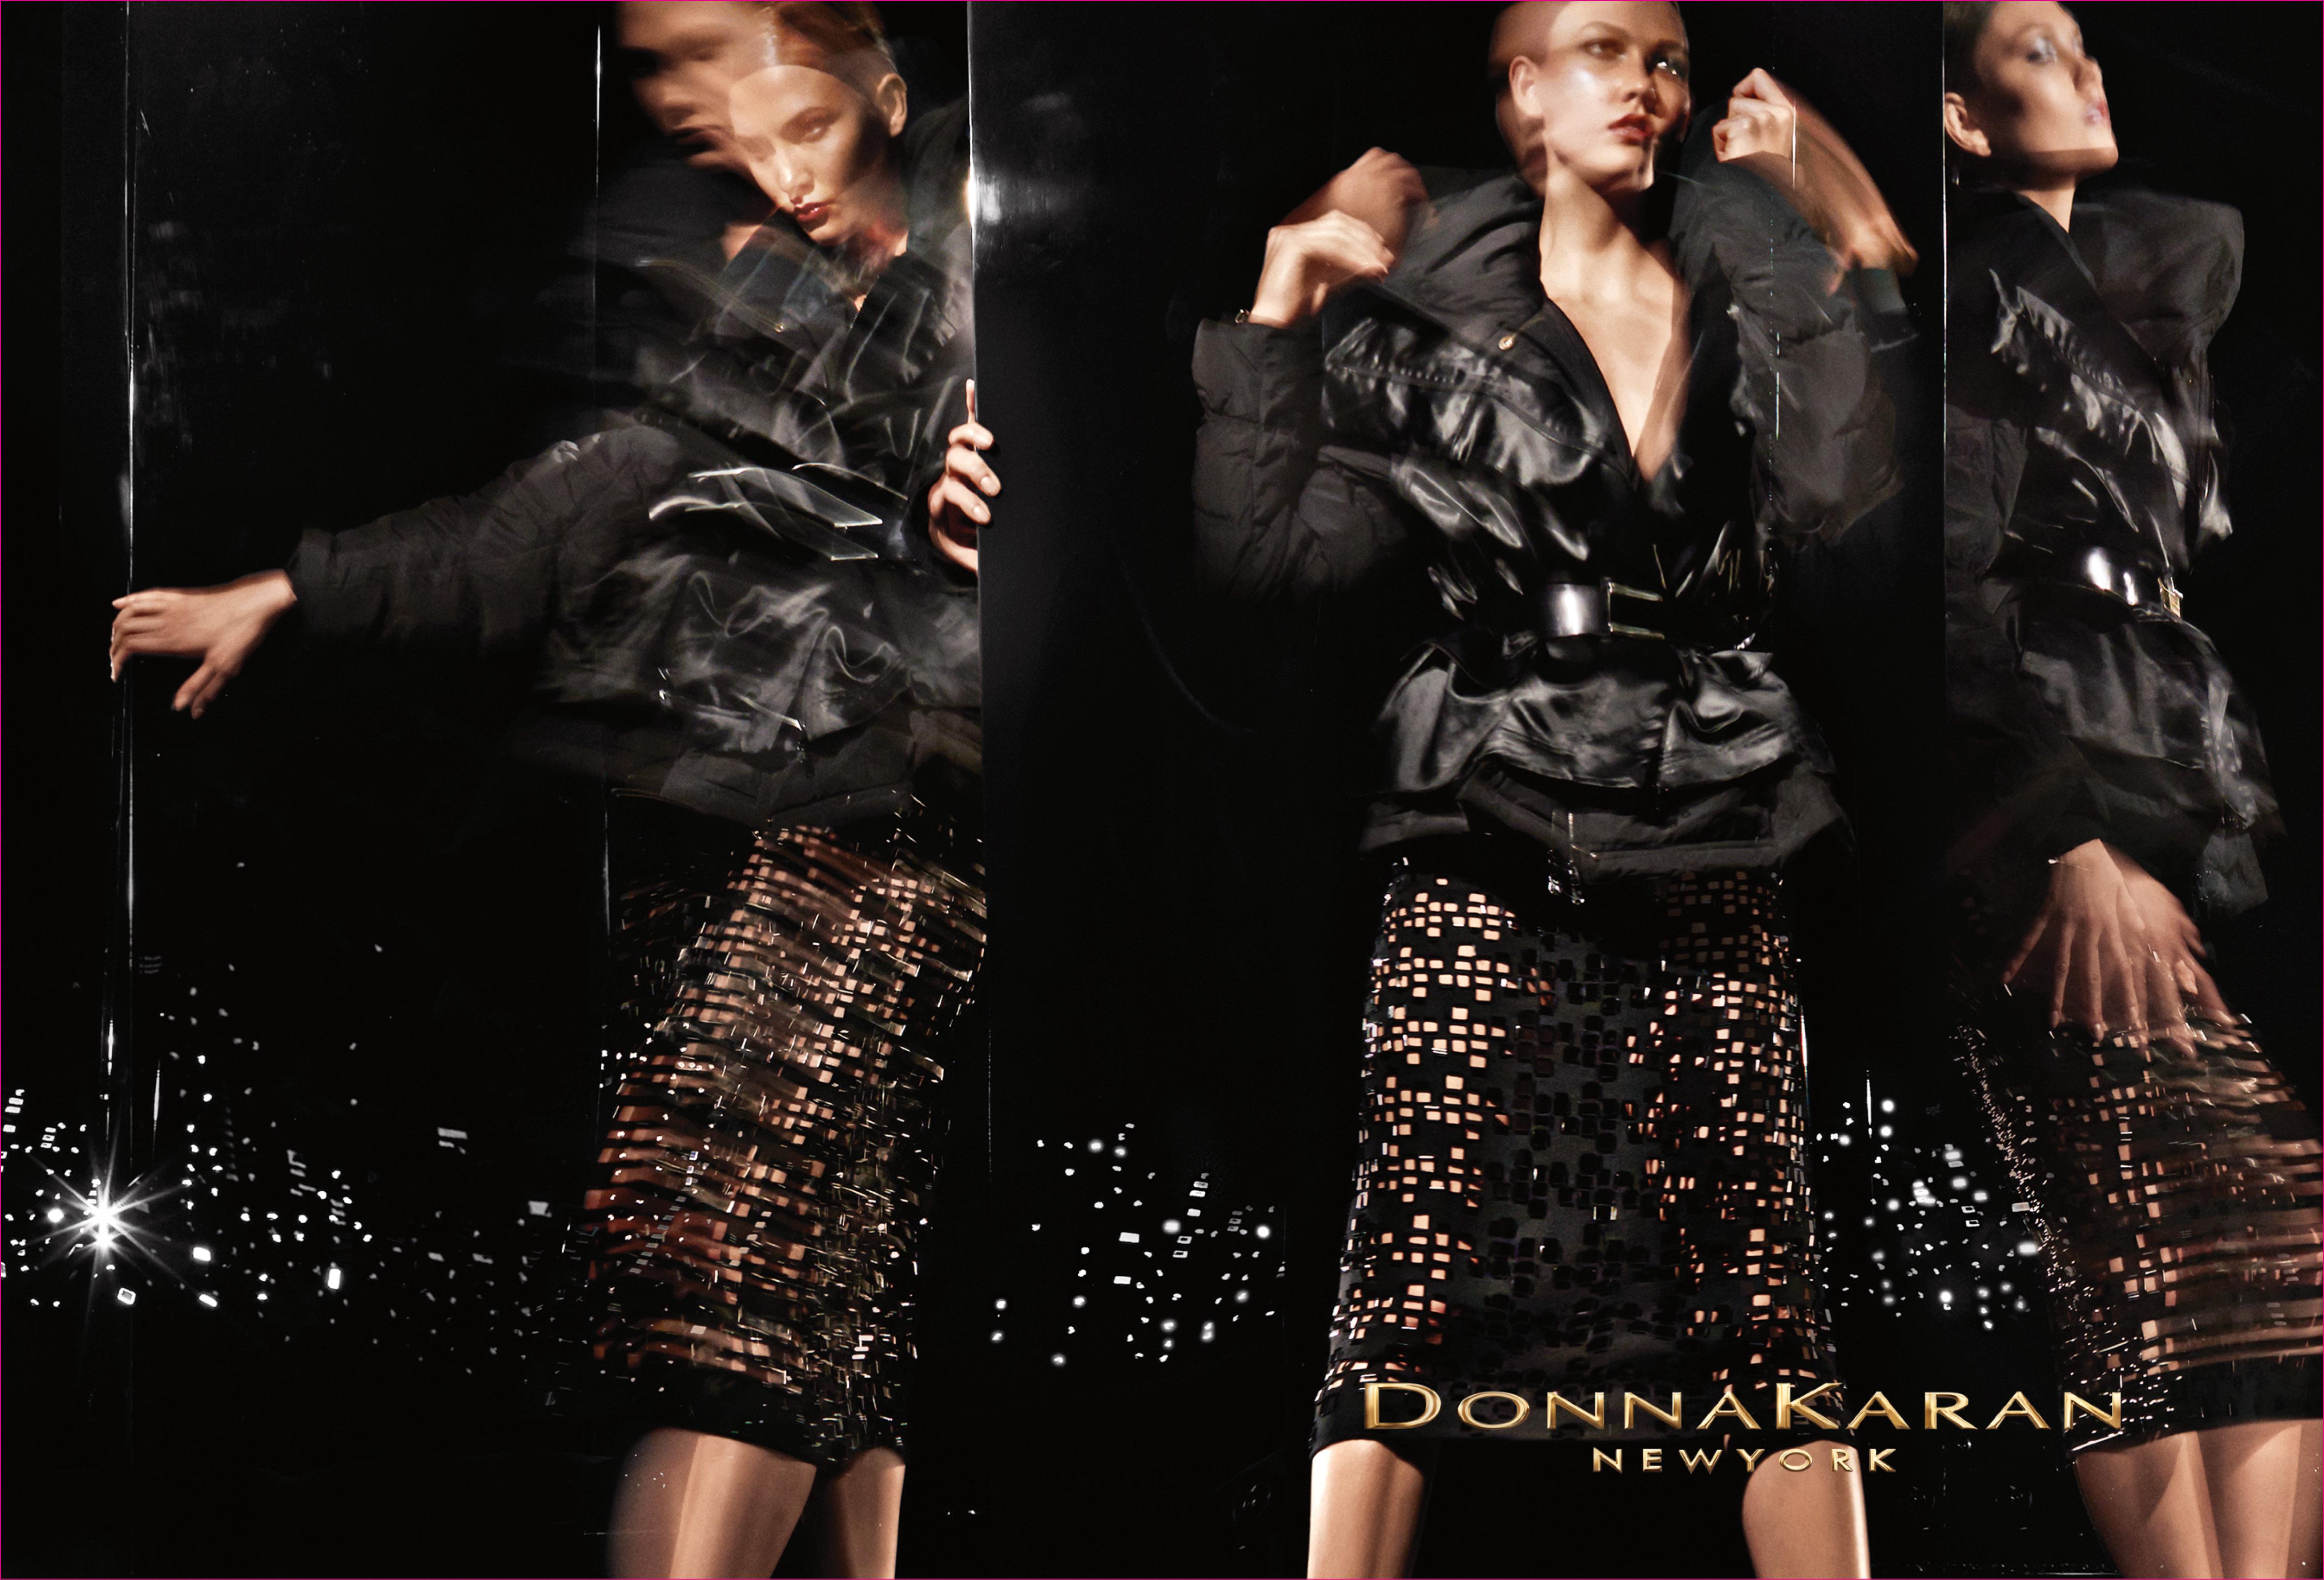 Donna Karan's passions go beyond fashion